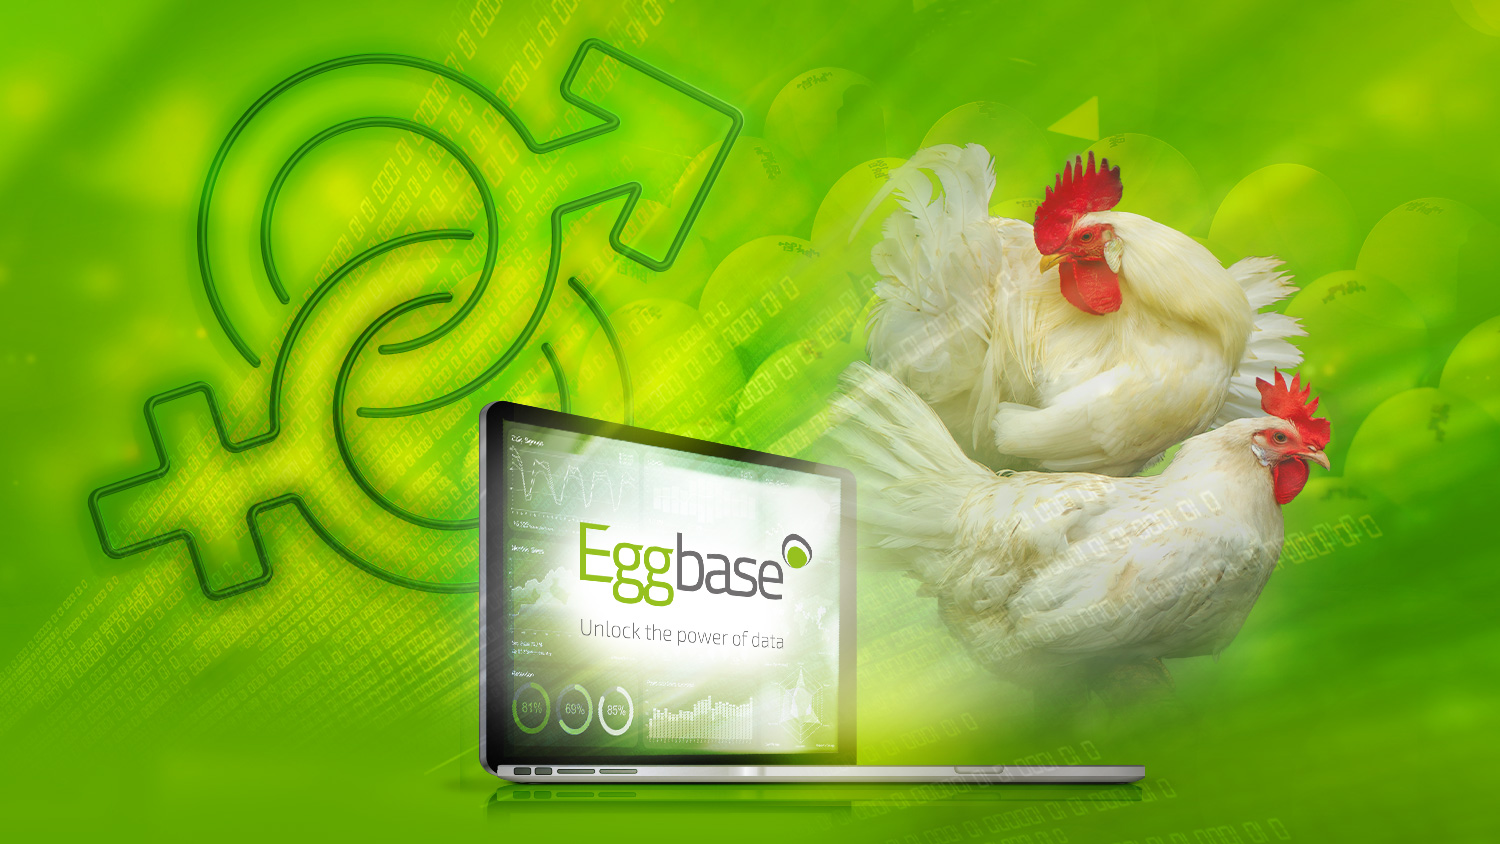 Eggbase Launch Software for Fertile Eggs